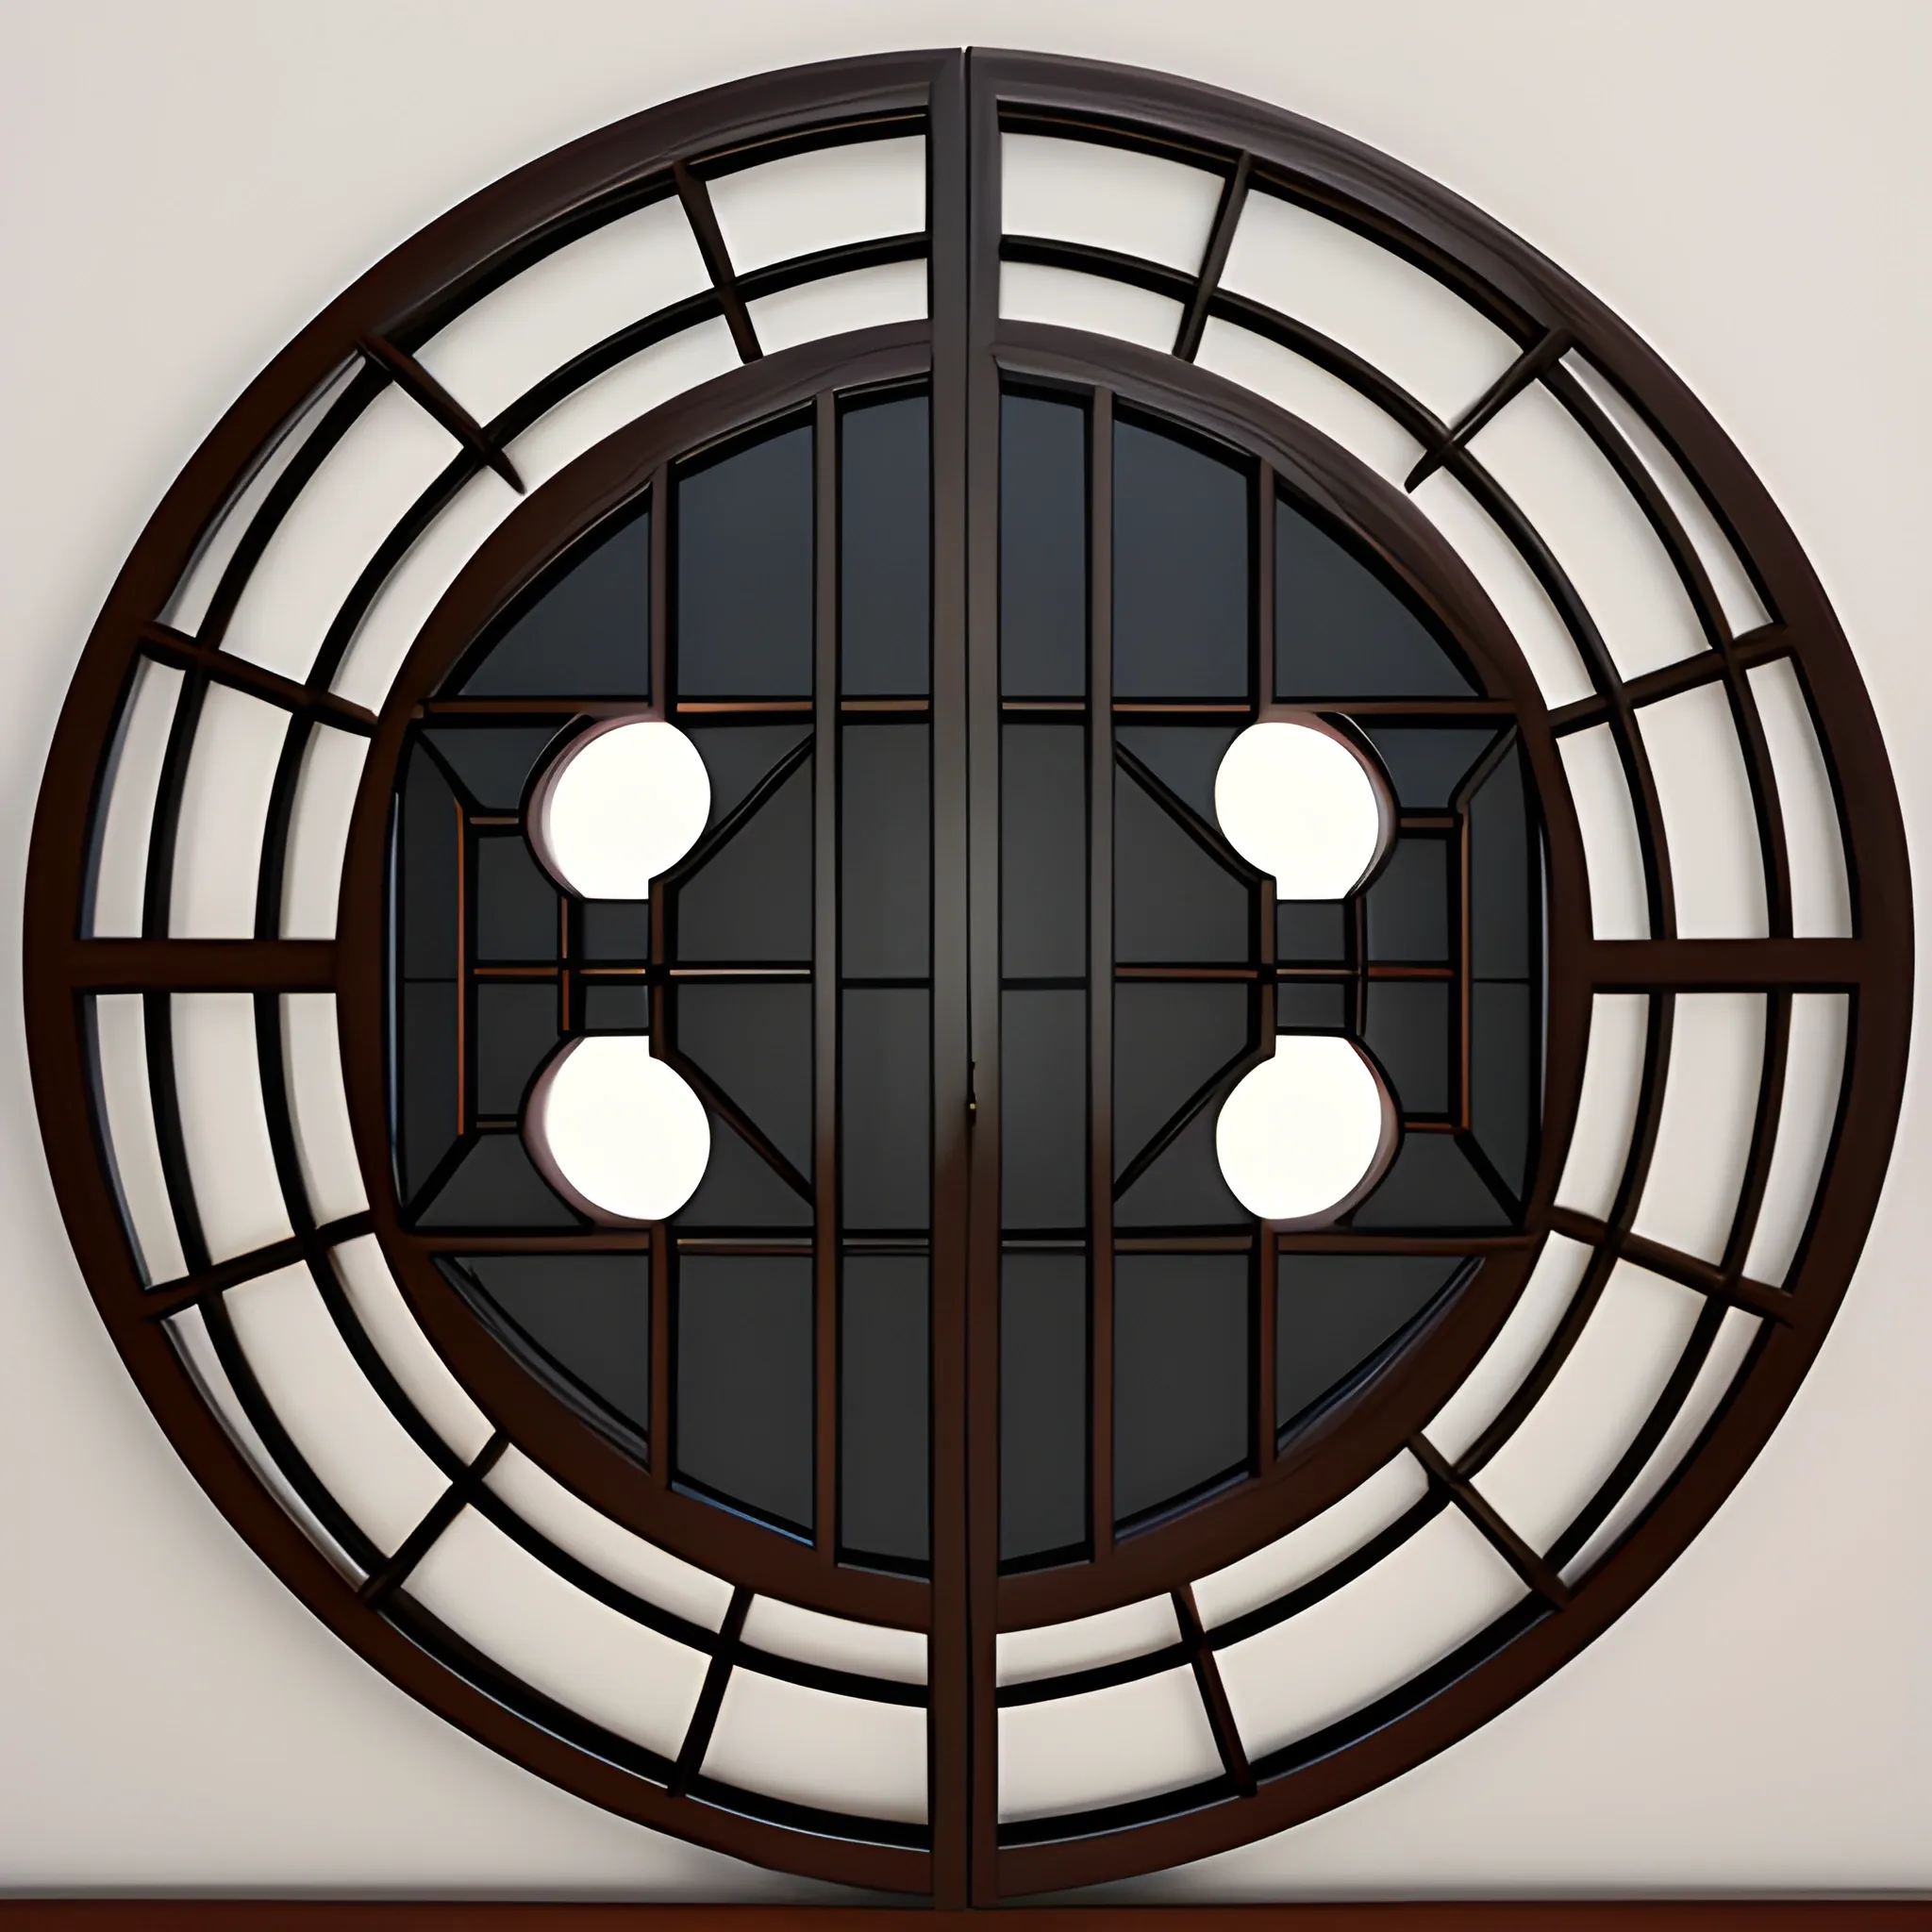 chinese lattice moon door


